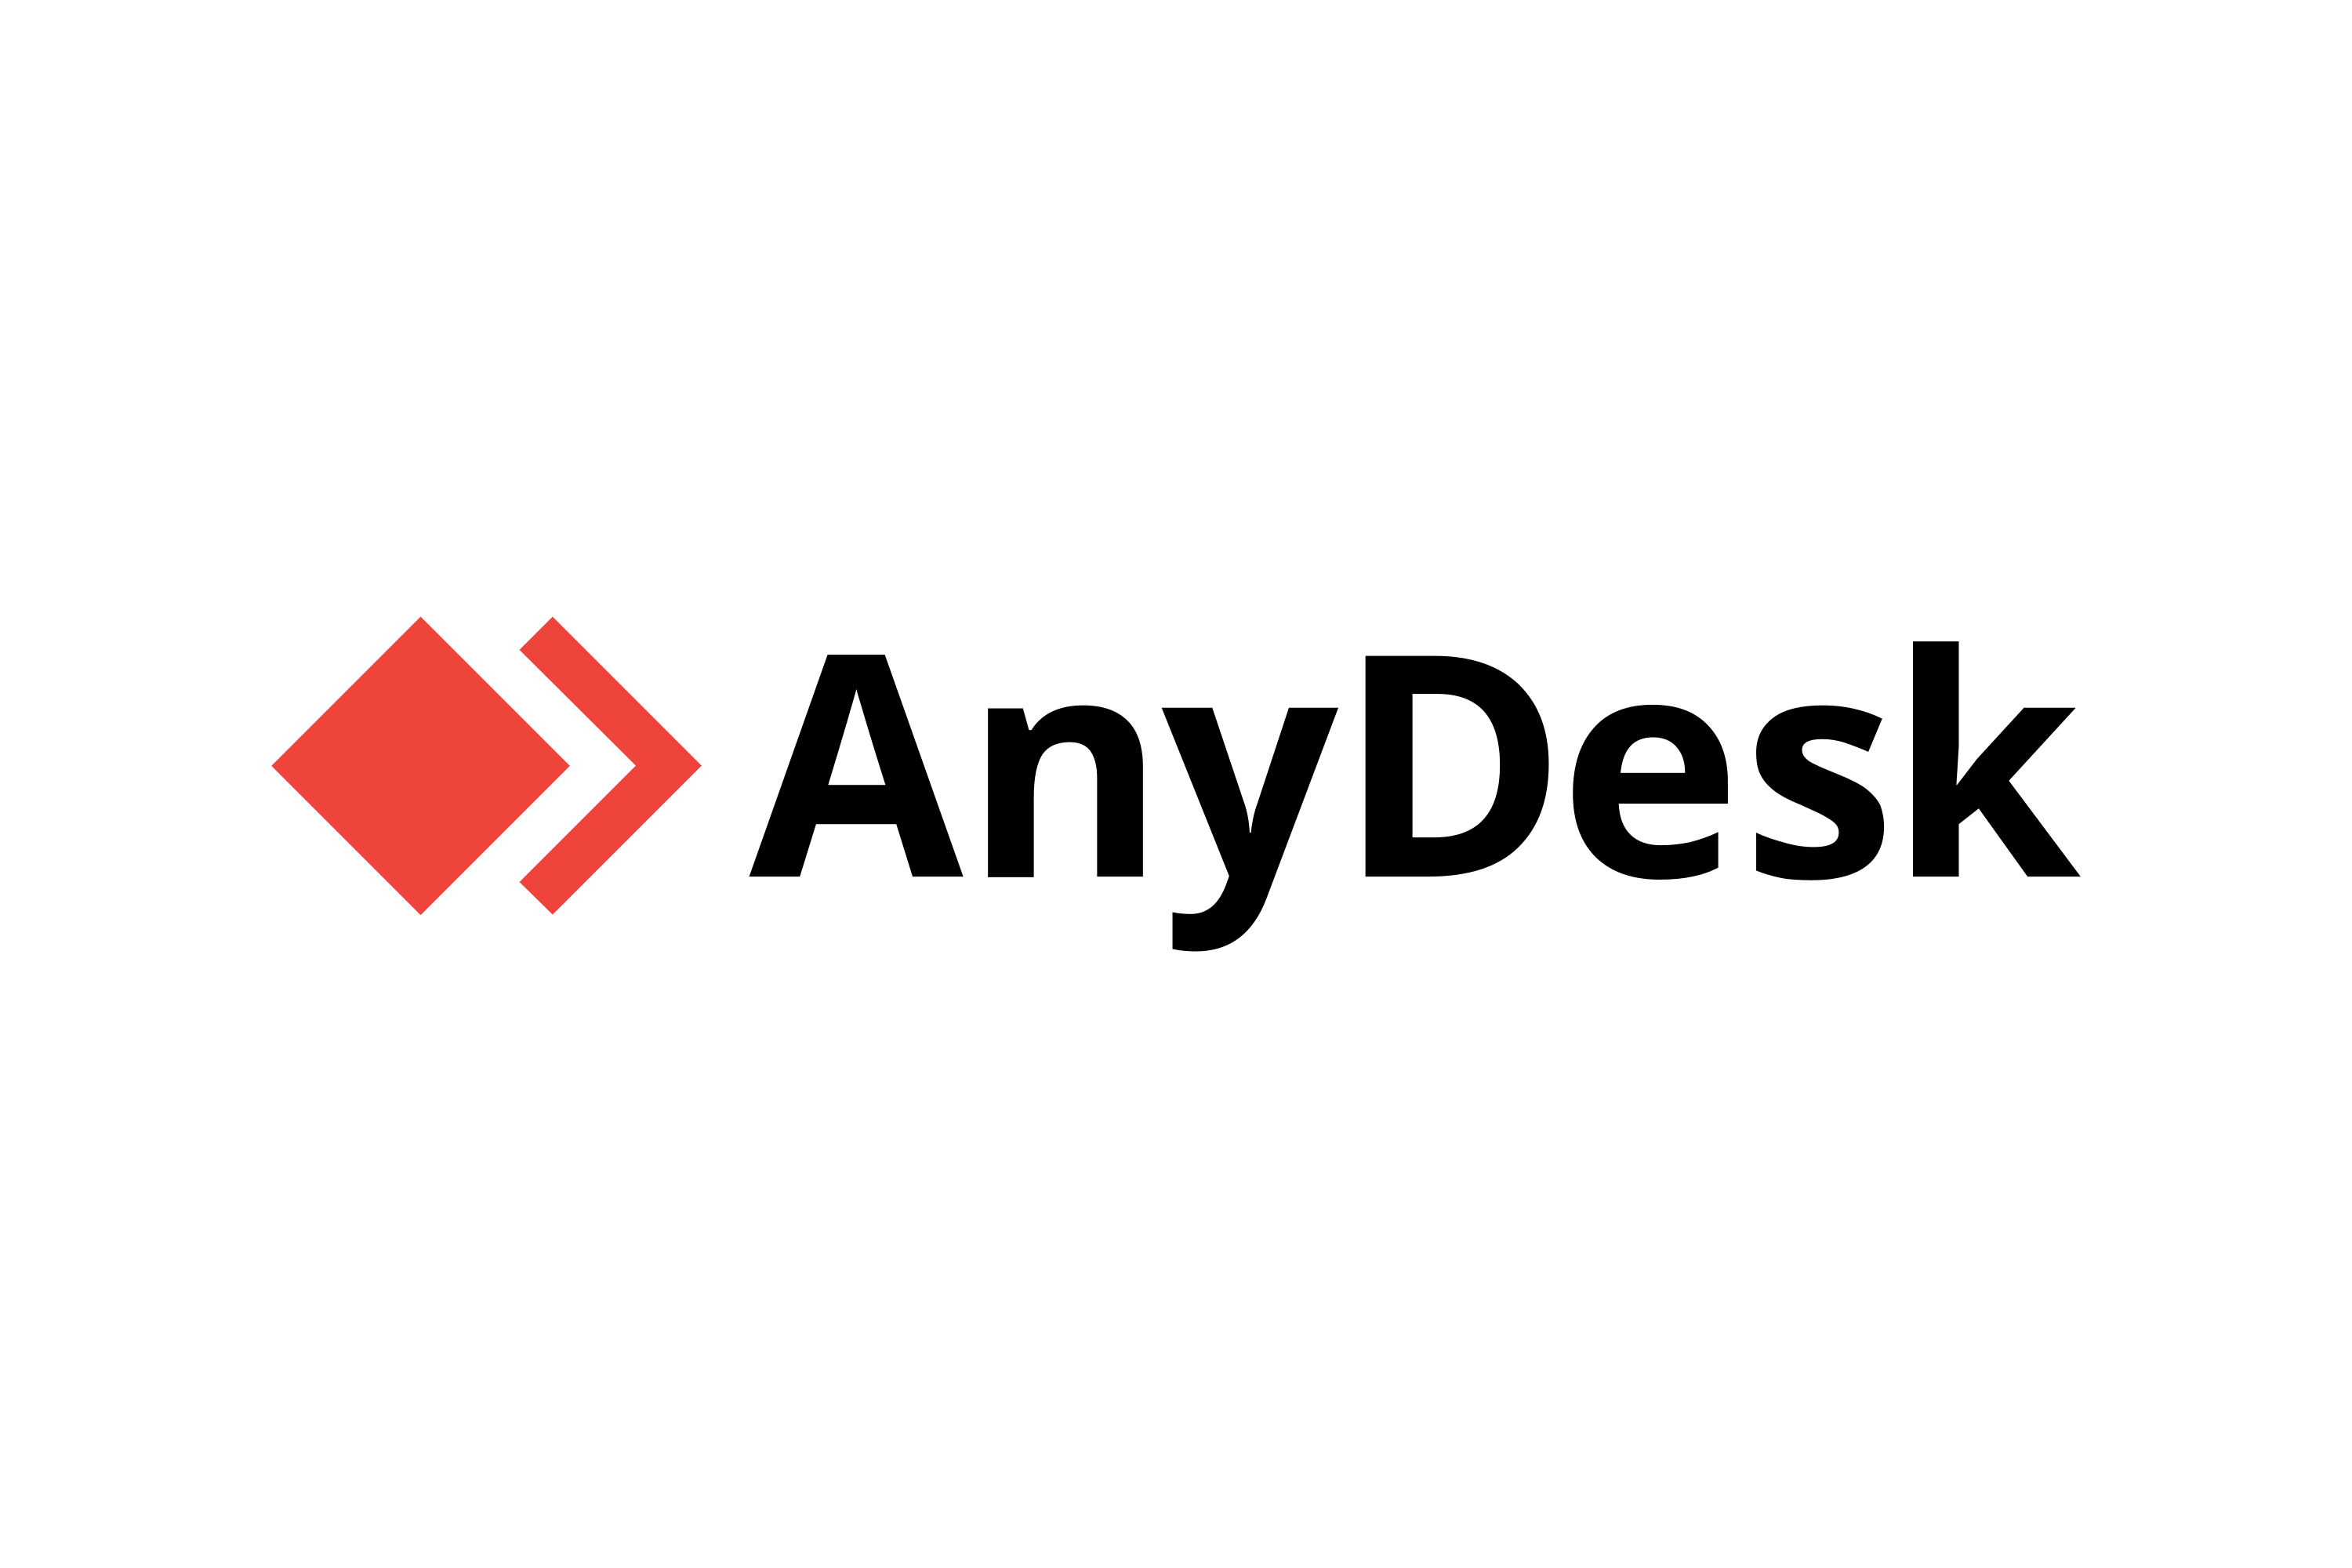 anydesk-logo